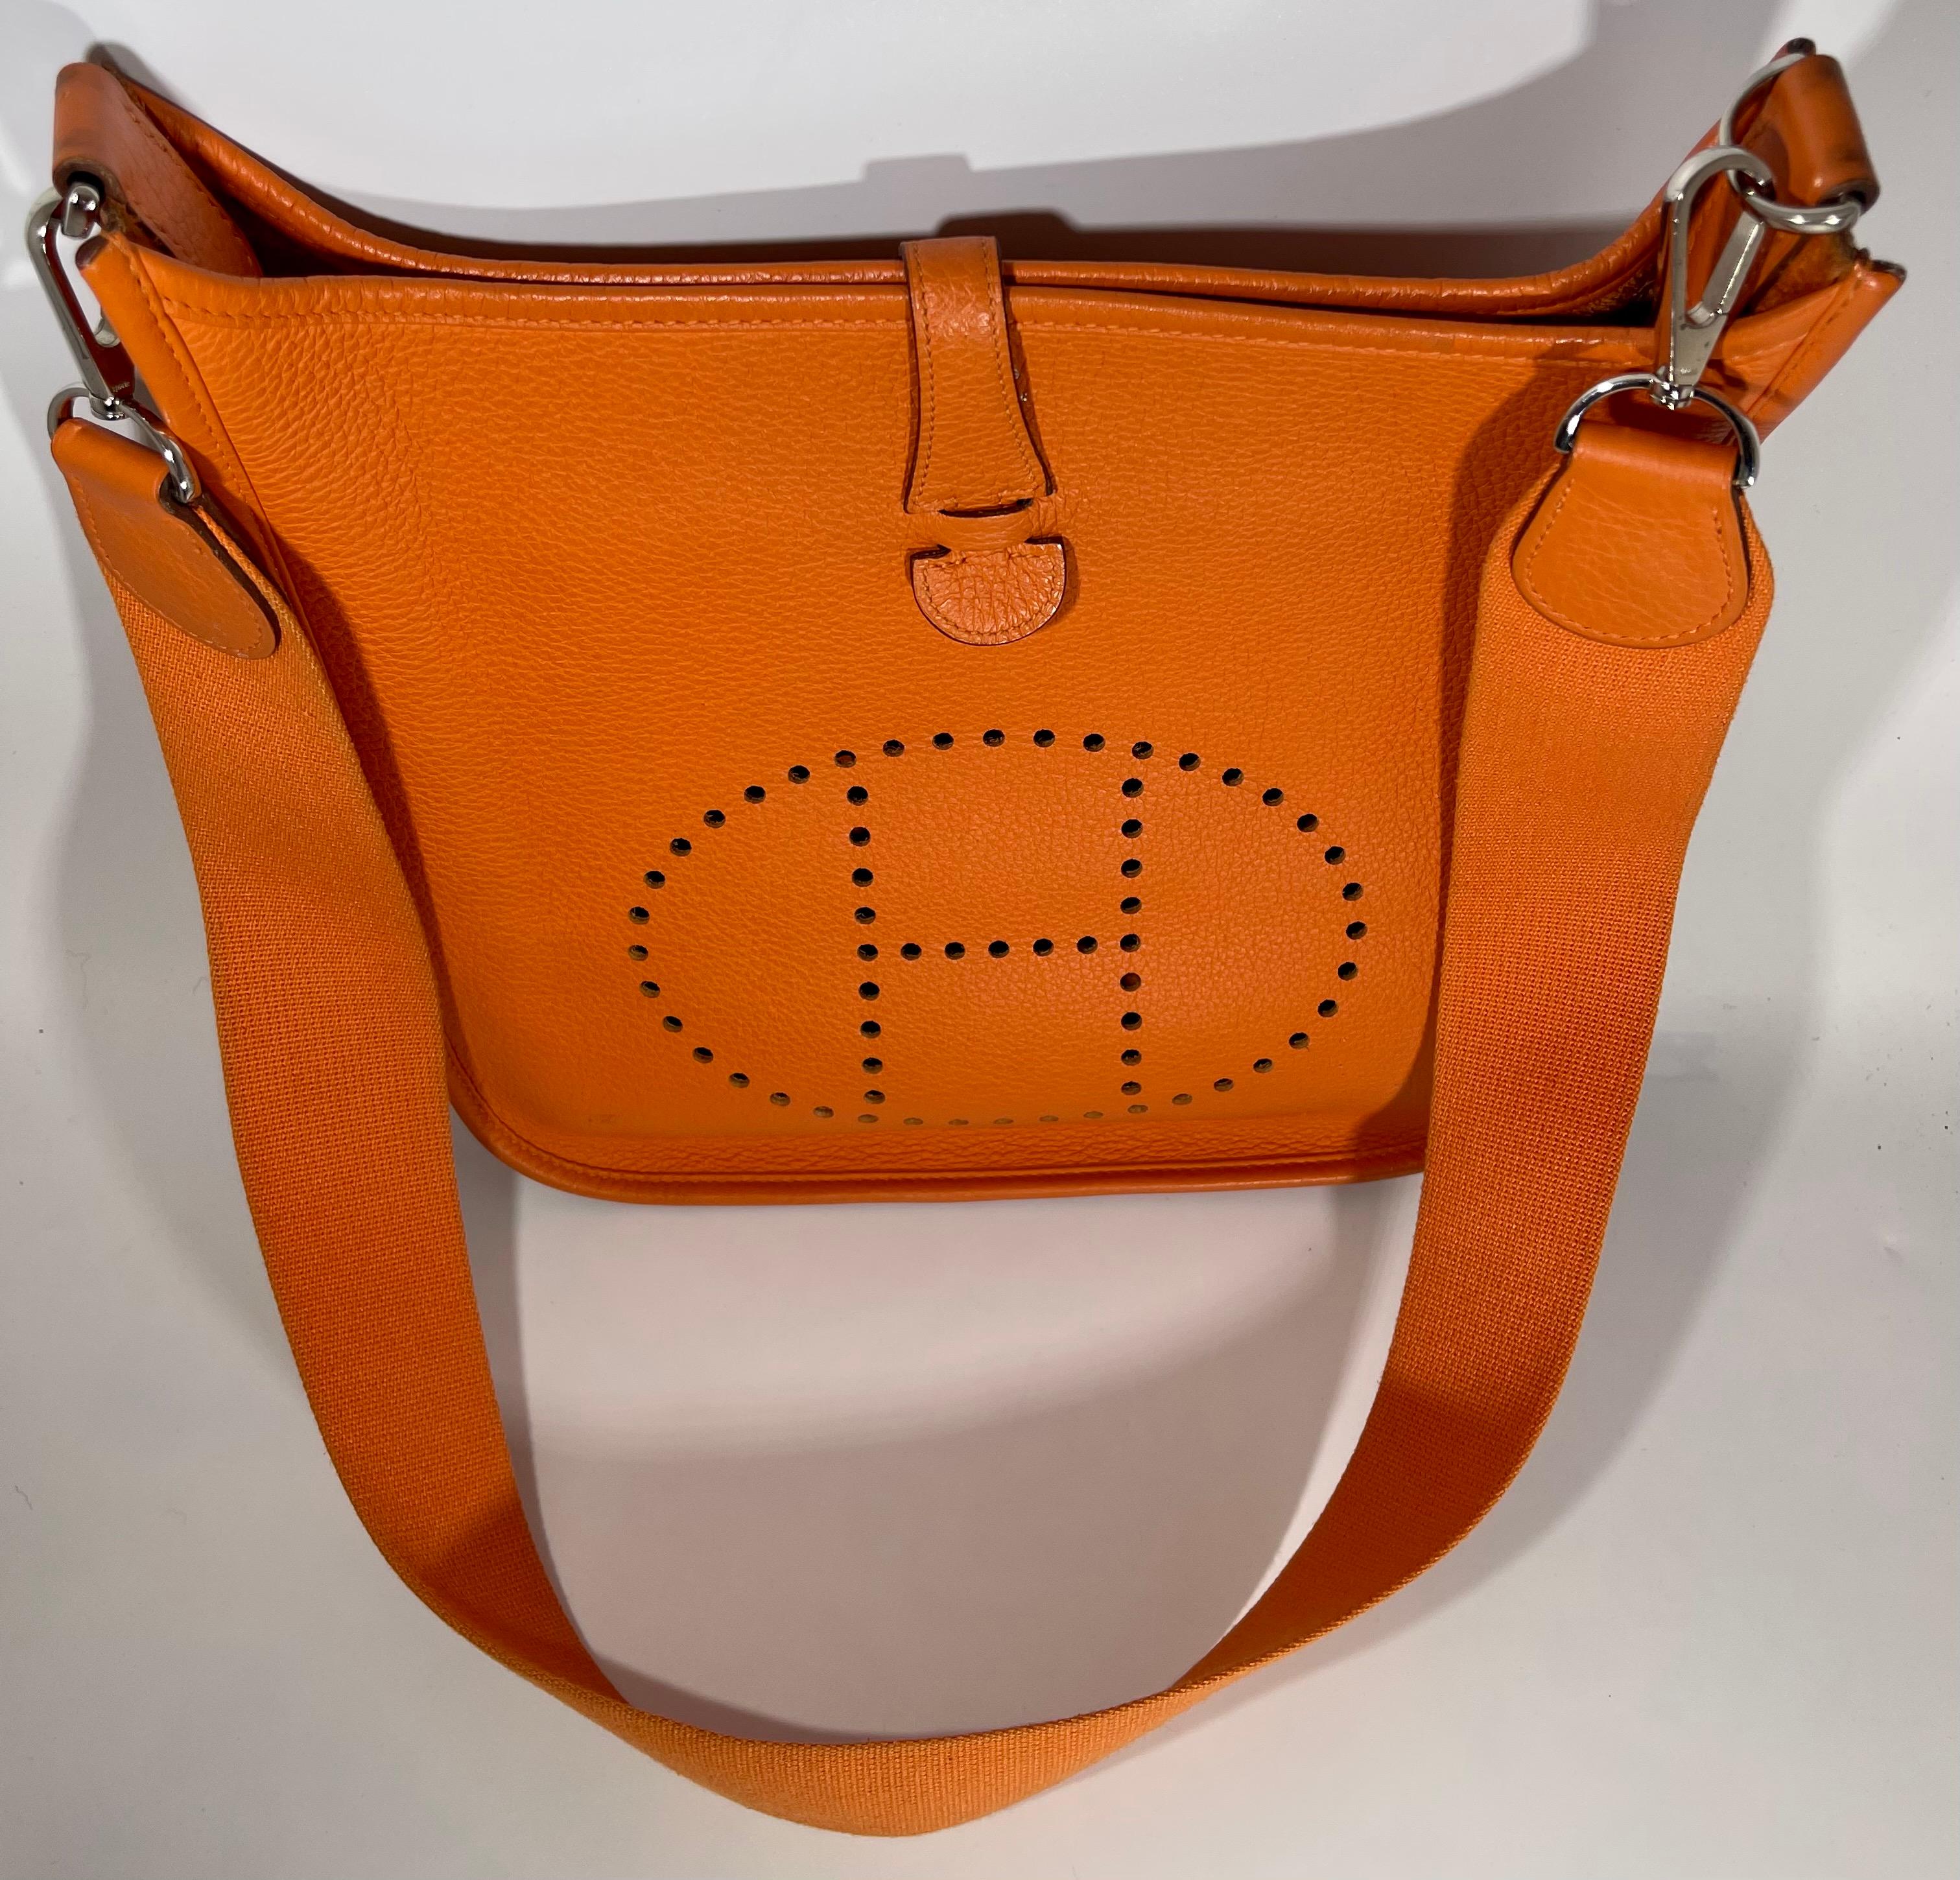 Women's Hermès Evelyne Pm Oranges Leather Cross Body Bag, Excellent condition